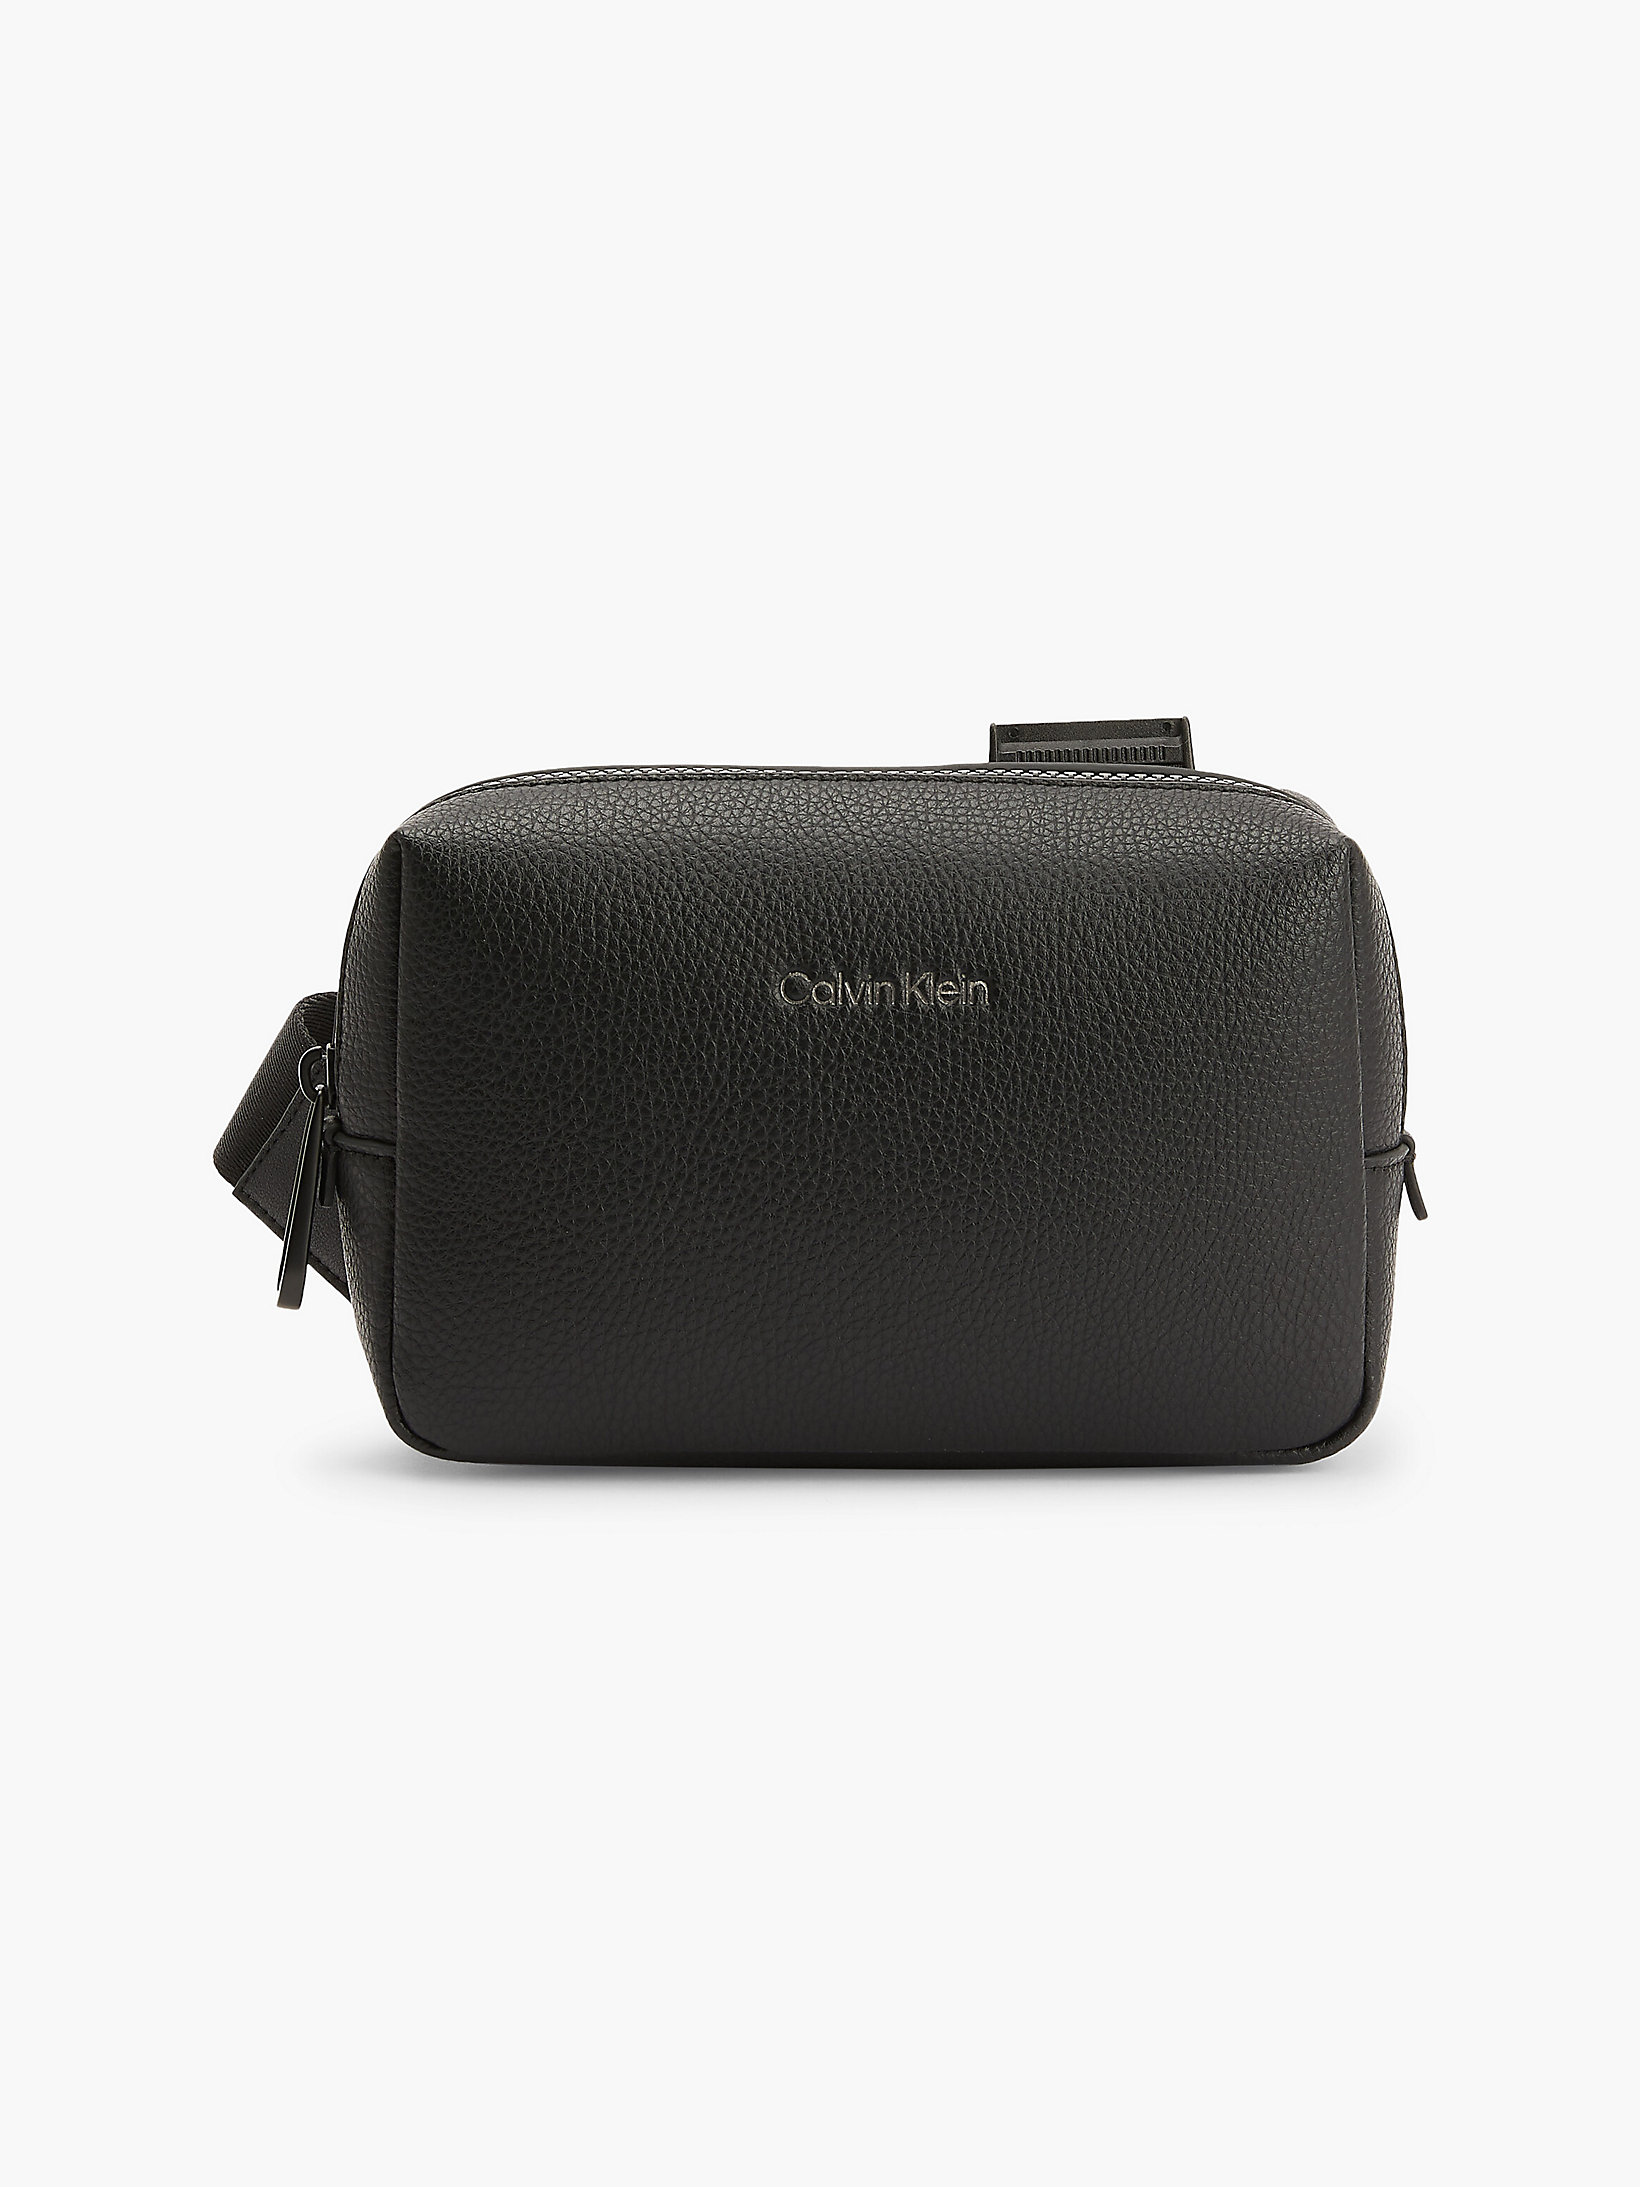 CK Black > Crossbody Harness Bag Aus Recyceltem Material > undefined Herren - Calvin Klein